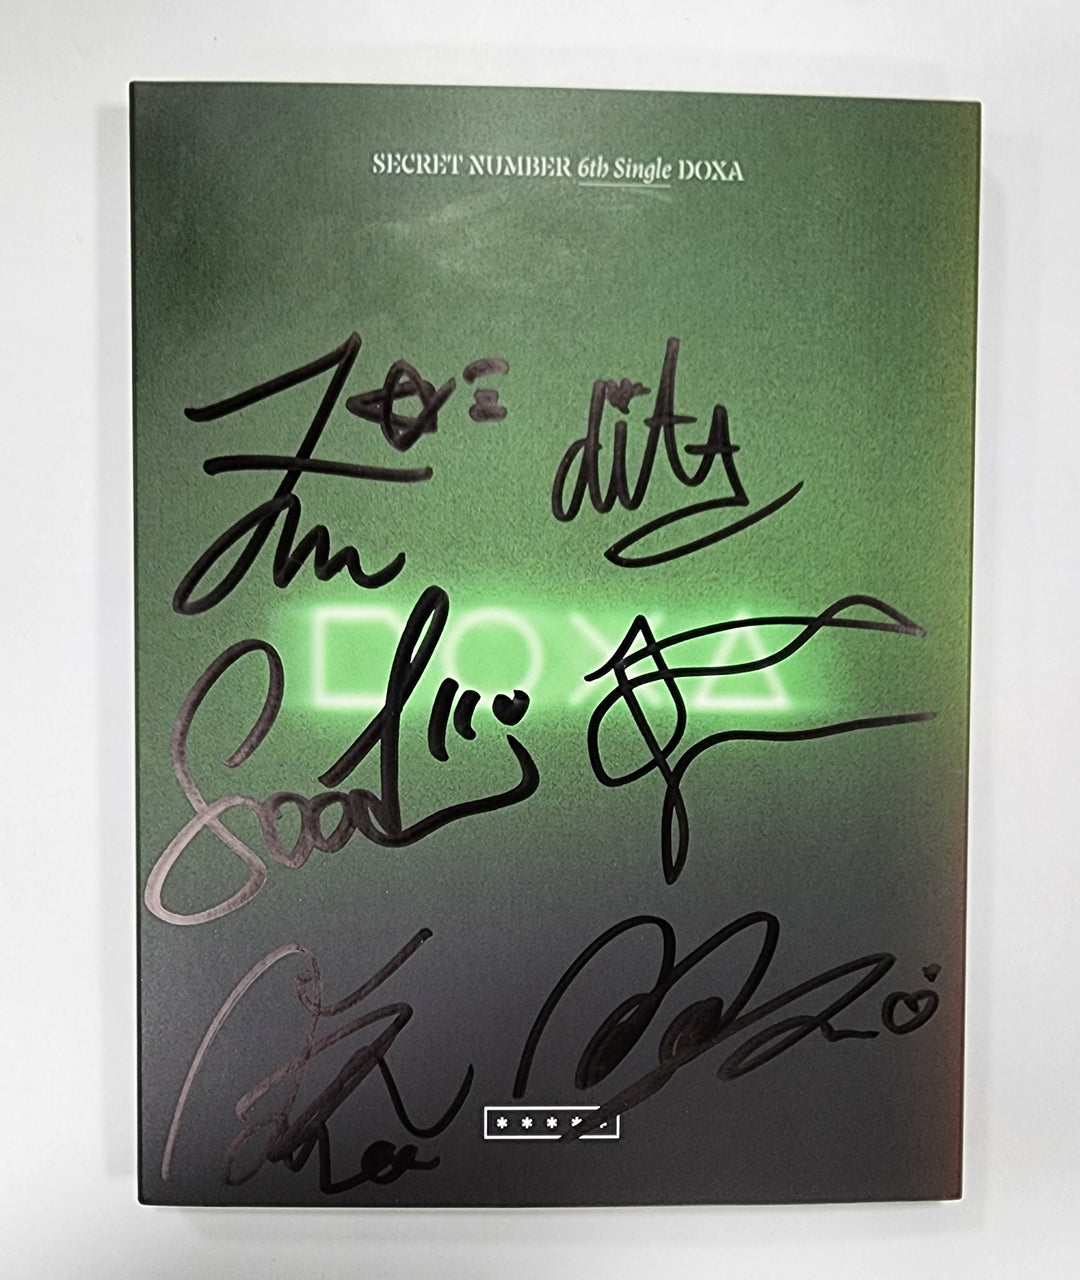 Secret Number "DOXA" - Hand Autographed(Signed) Album